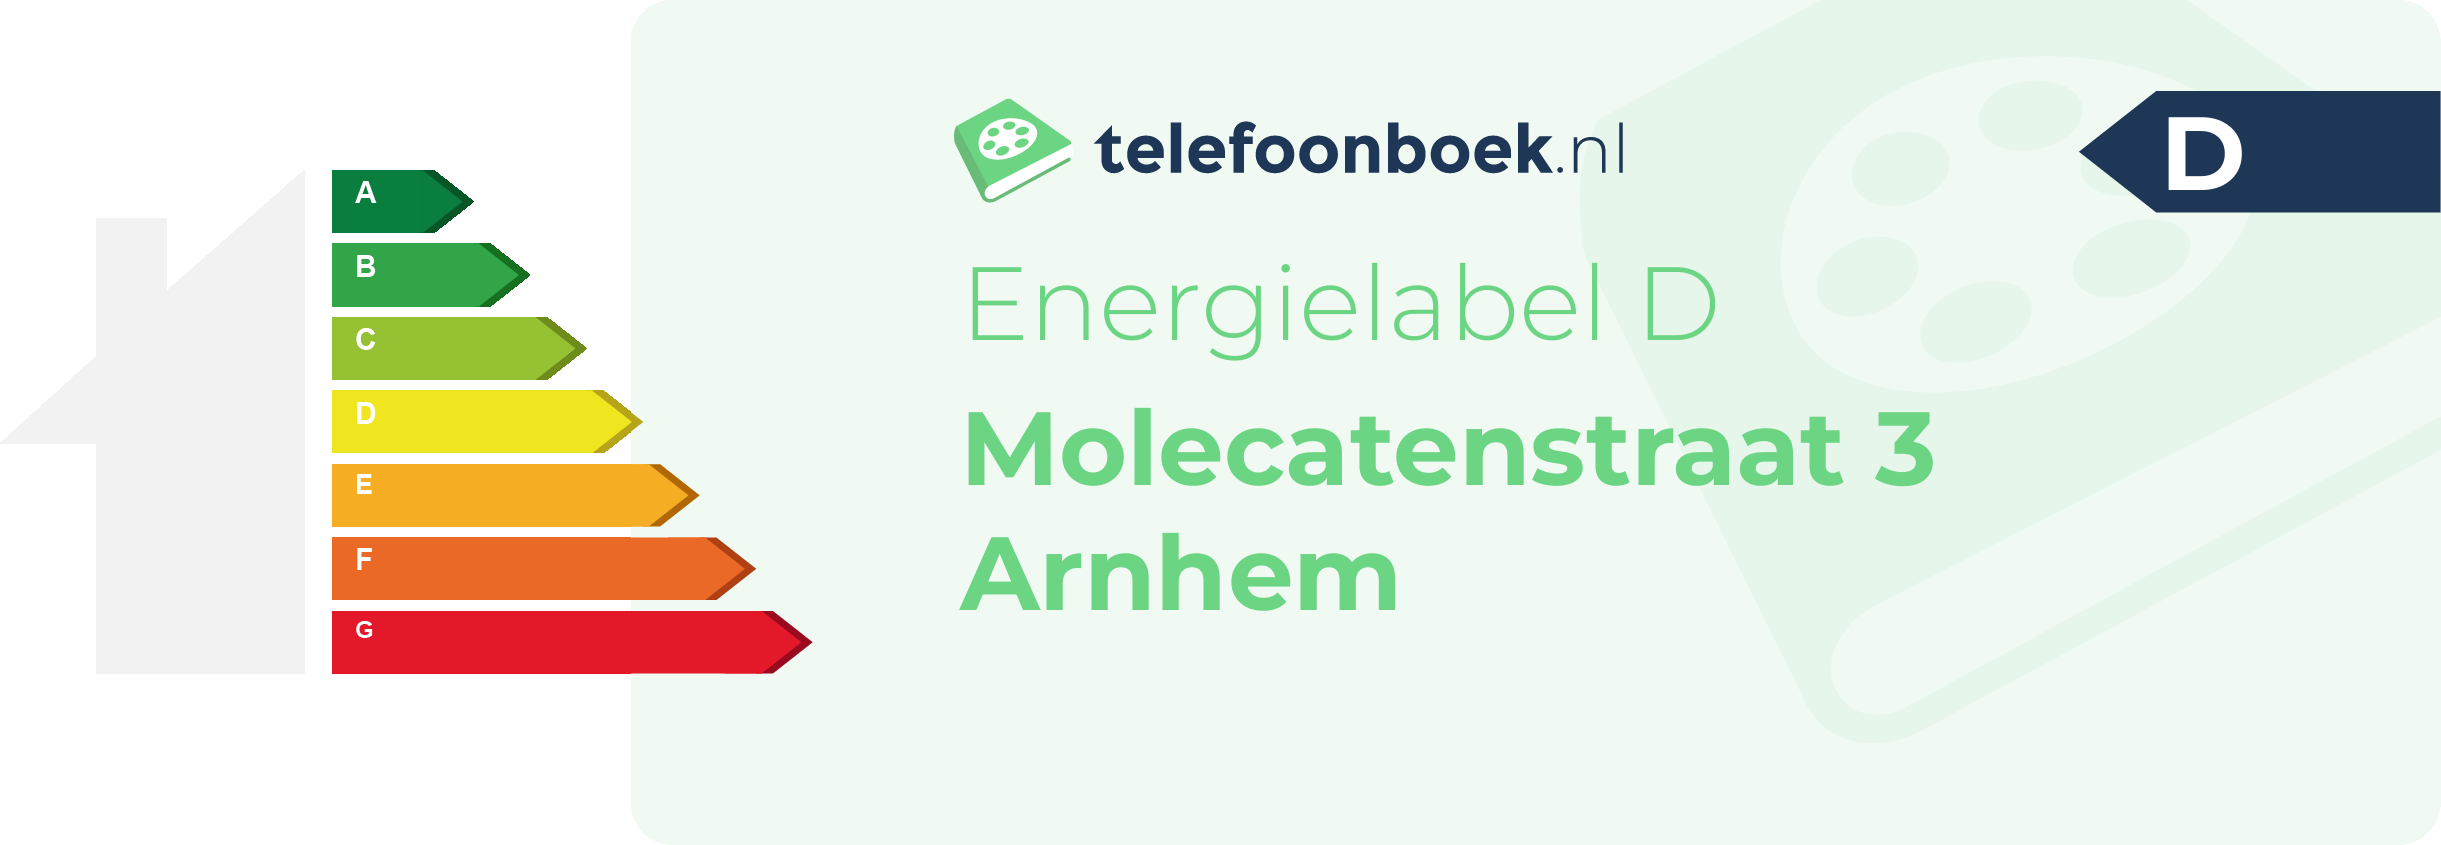 Energielabel Molecatenstraat 3 Arnhem